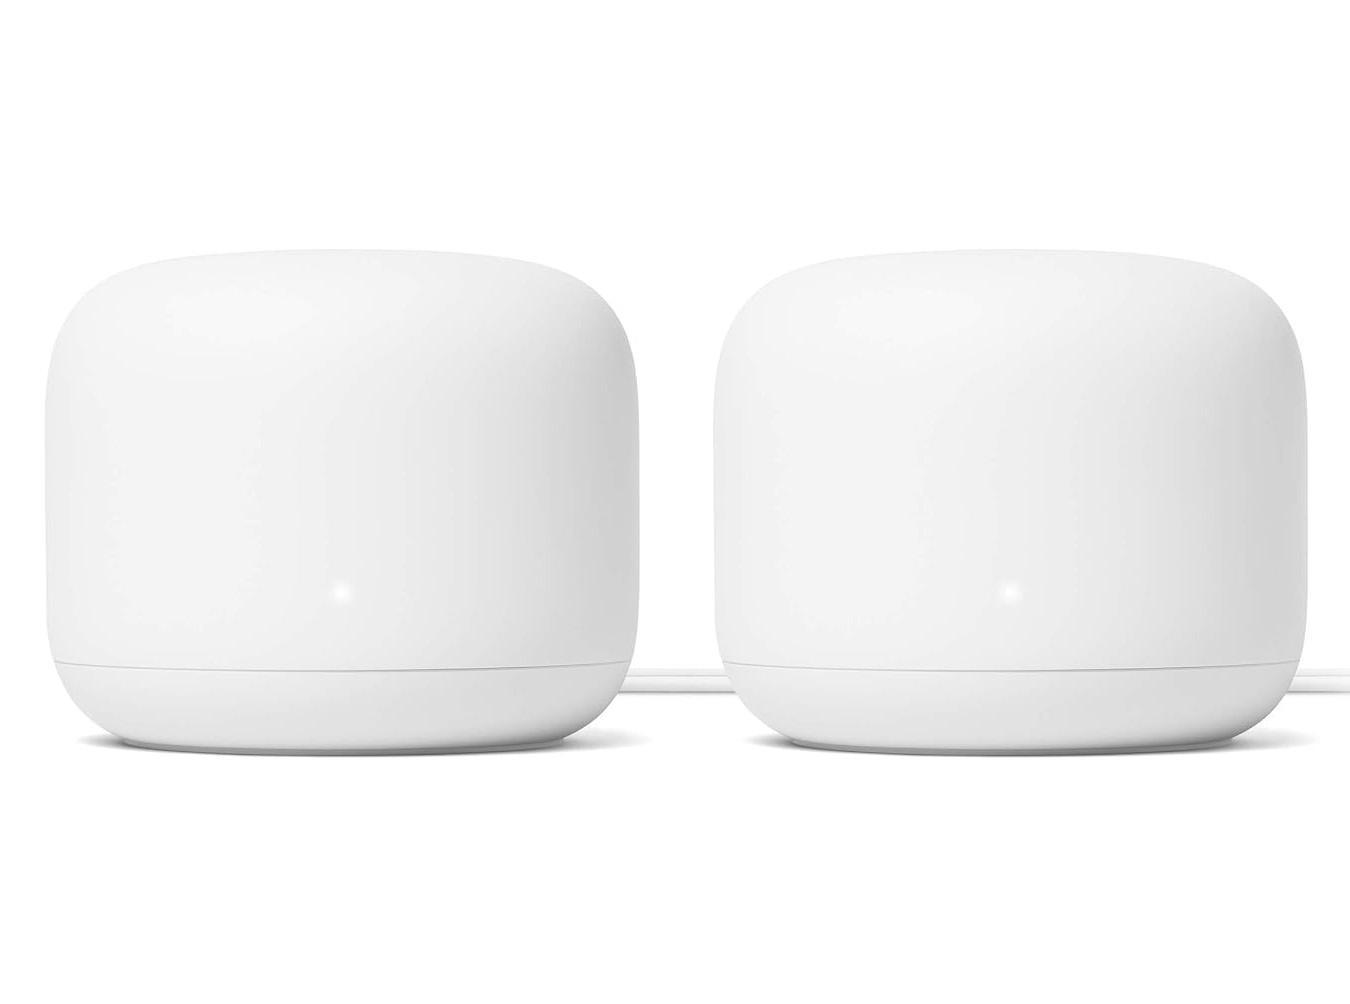 Google Nest Wifi Mesh Router 2 Pack for $83.60 Shipped